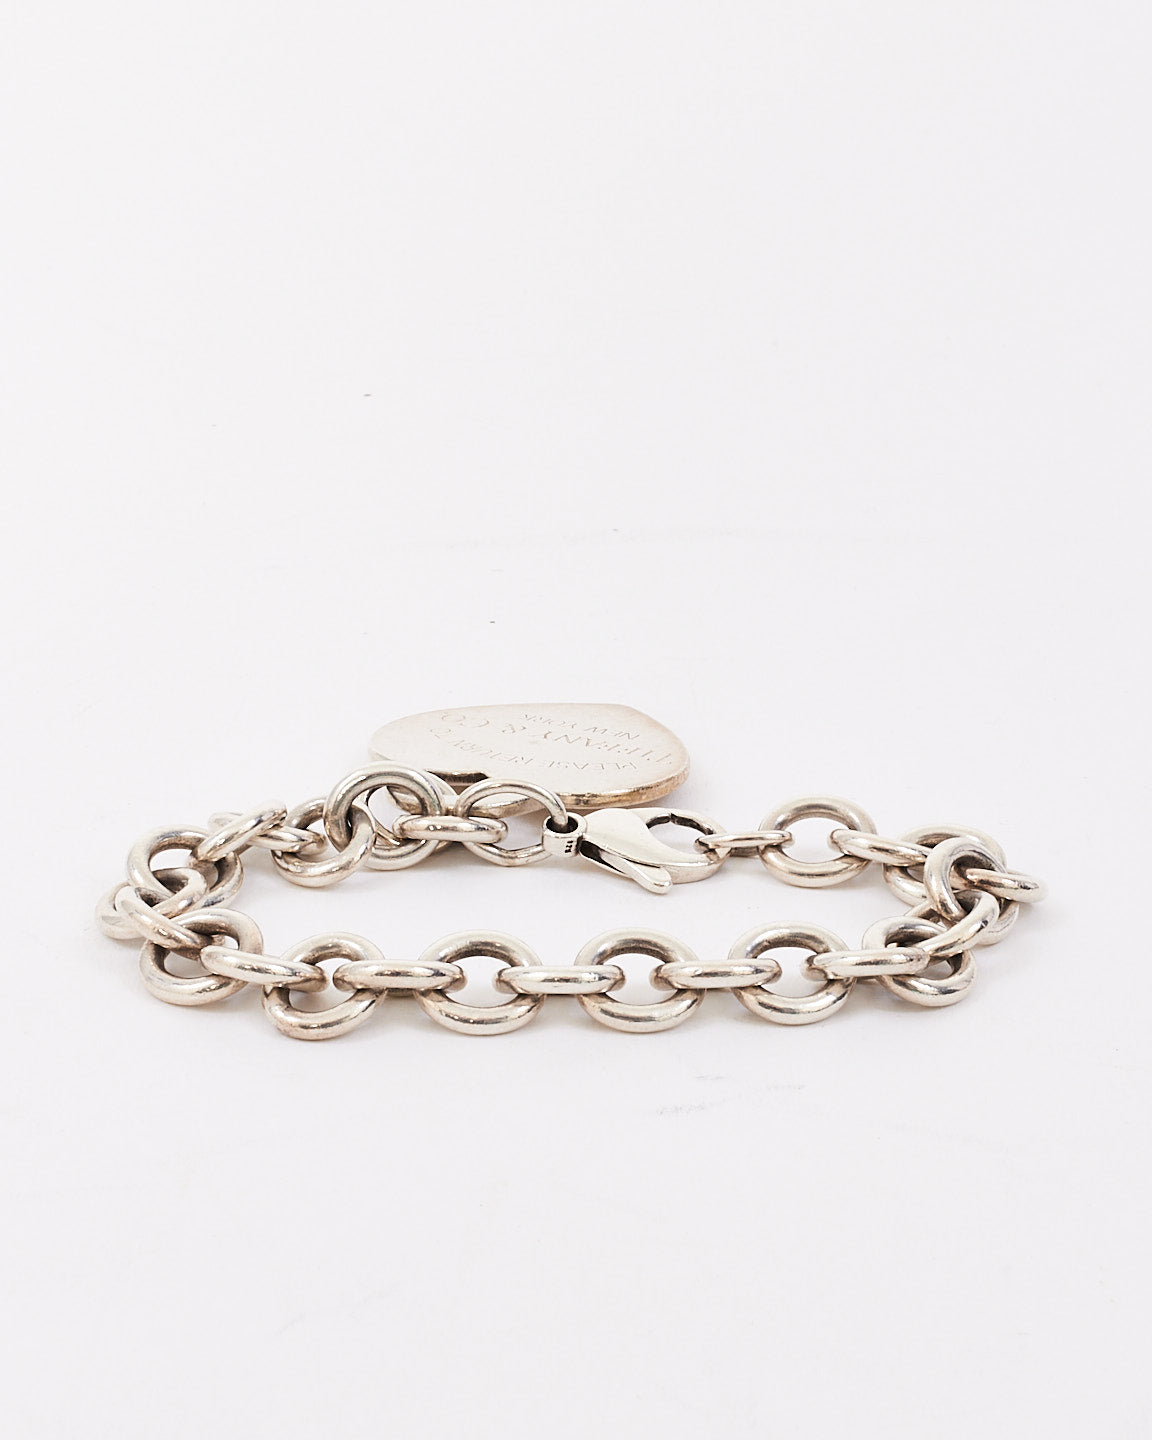 Tiffany & Co. Sterling Silver Return to Tiffany Heart Tag Charm Bracelet